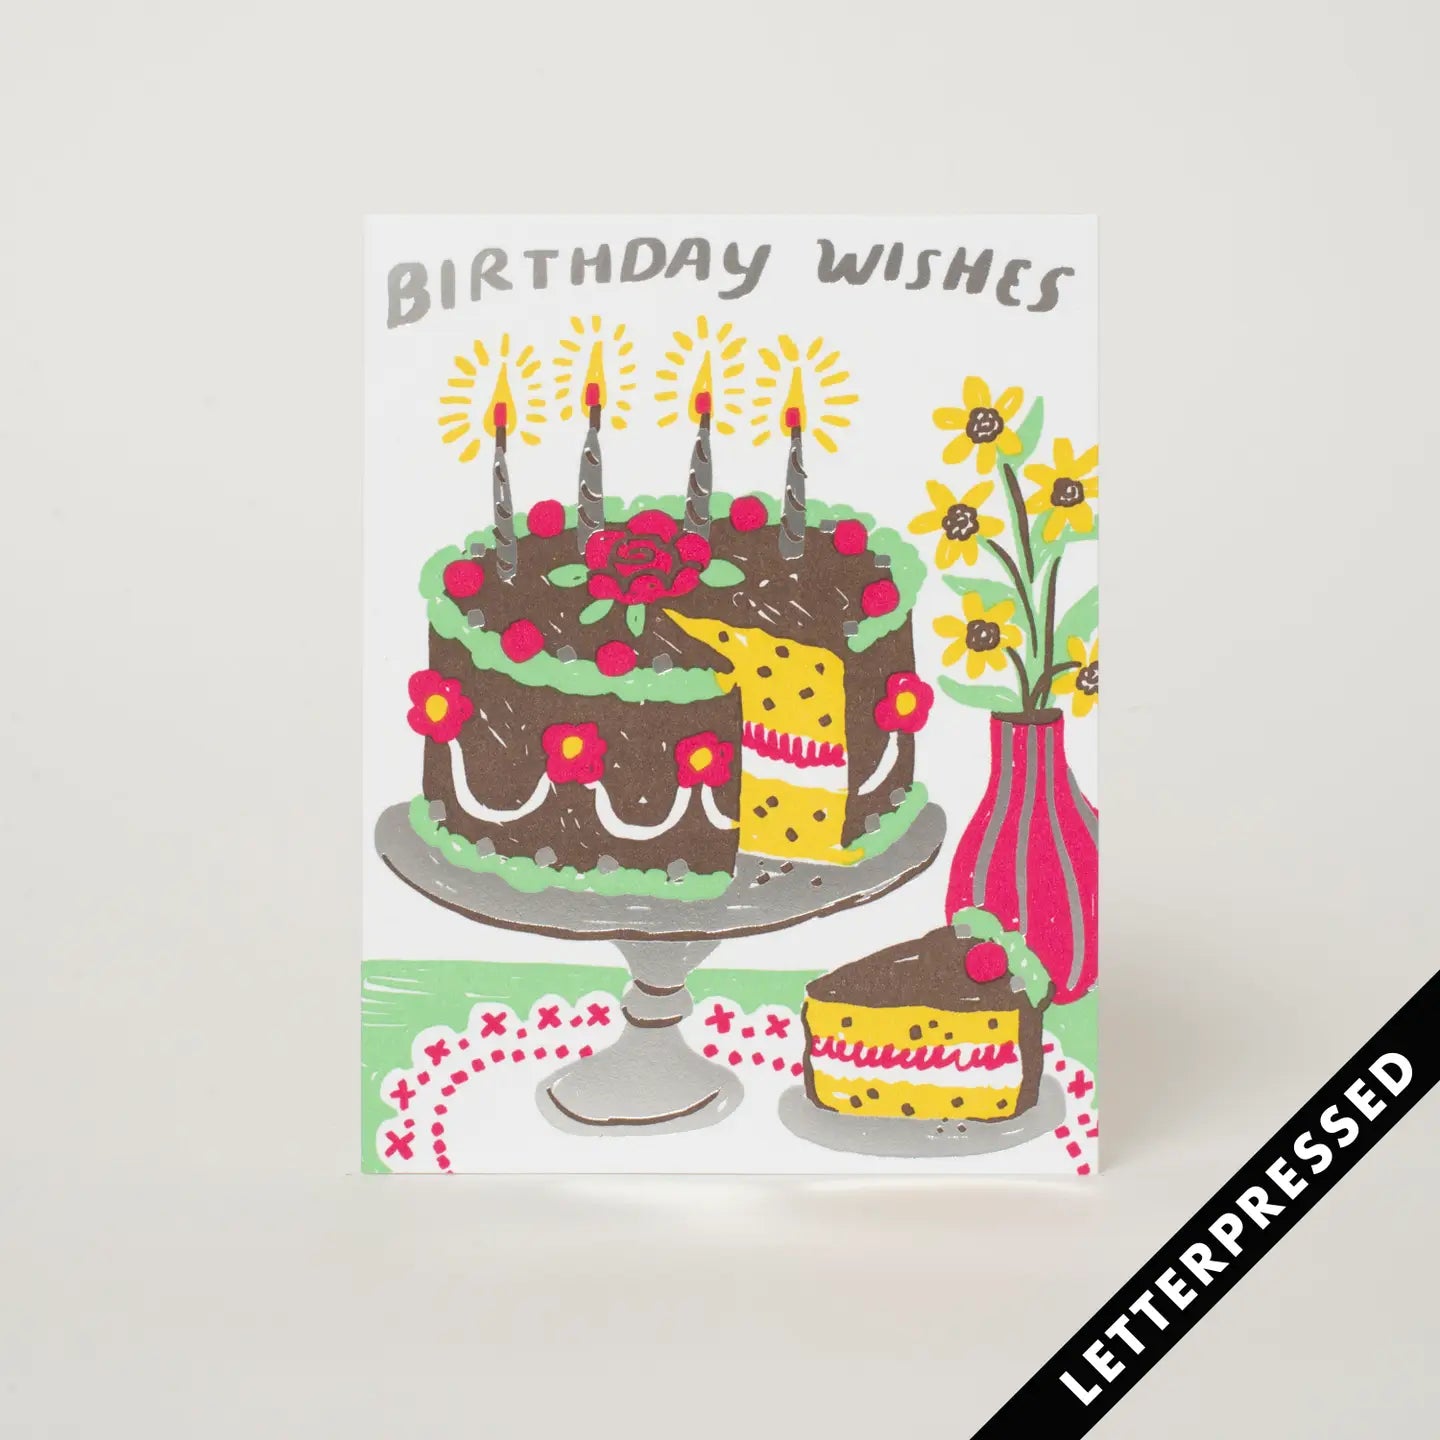 Egg Press Greeting Card - Birthday Wishes